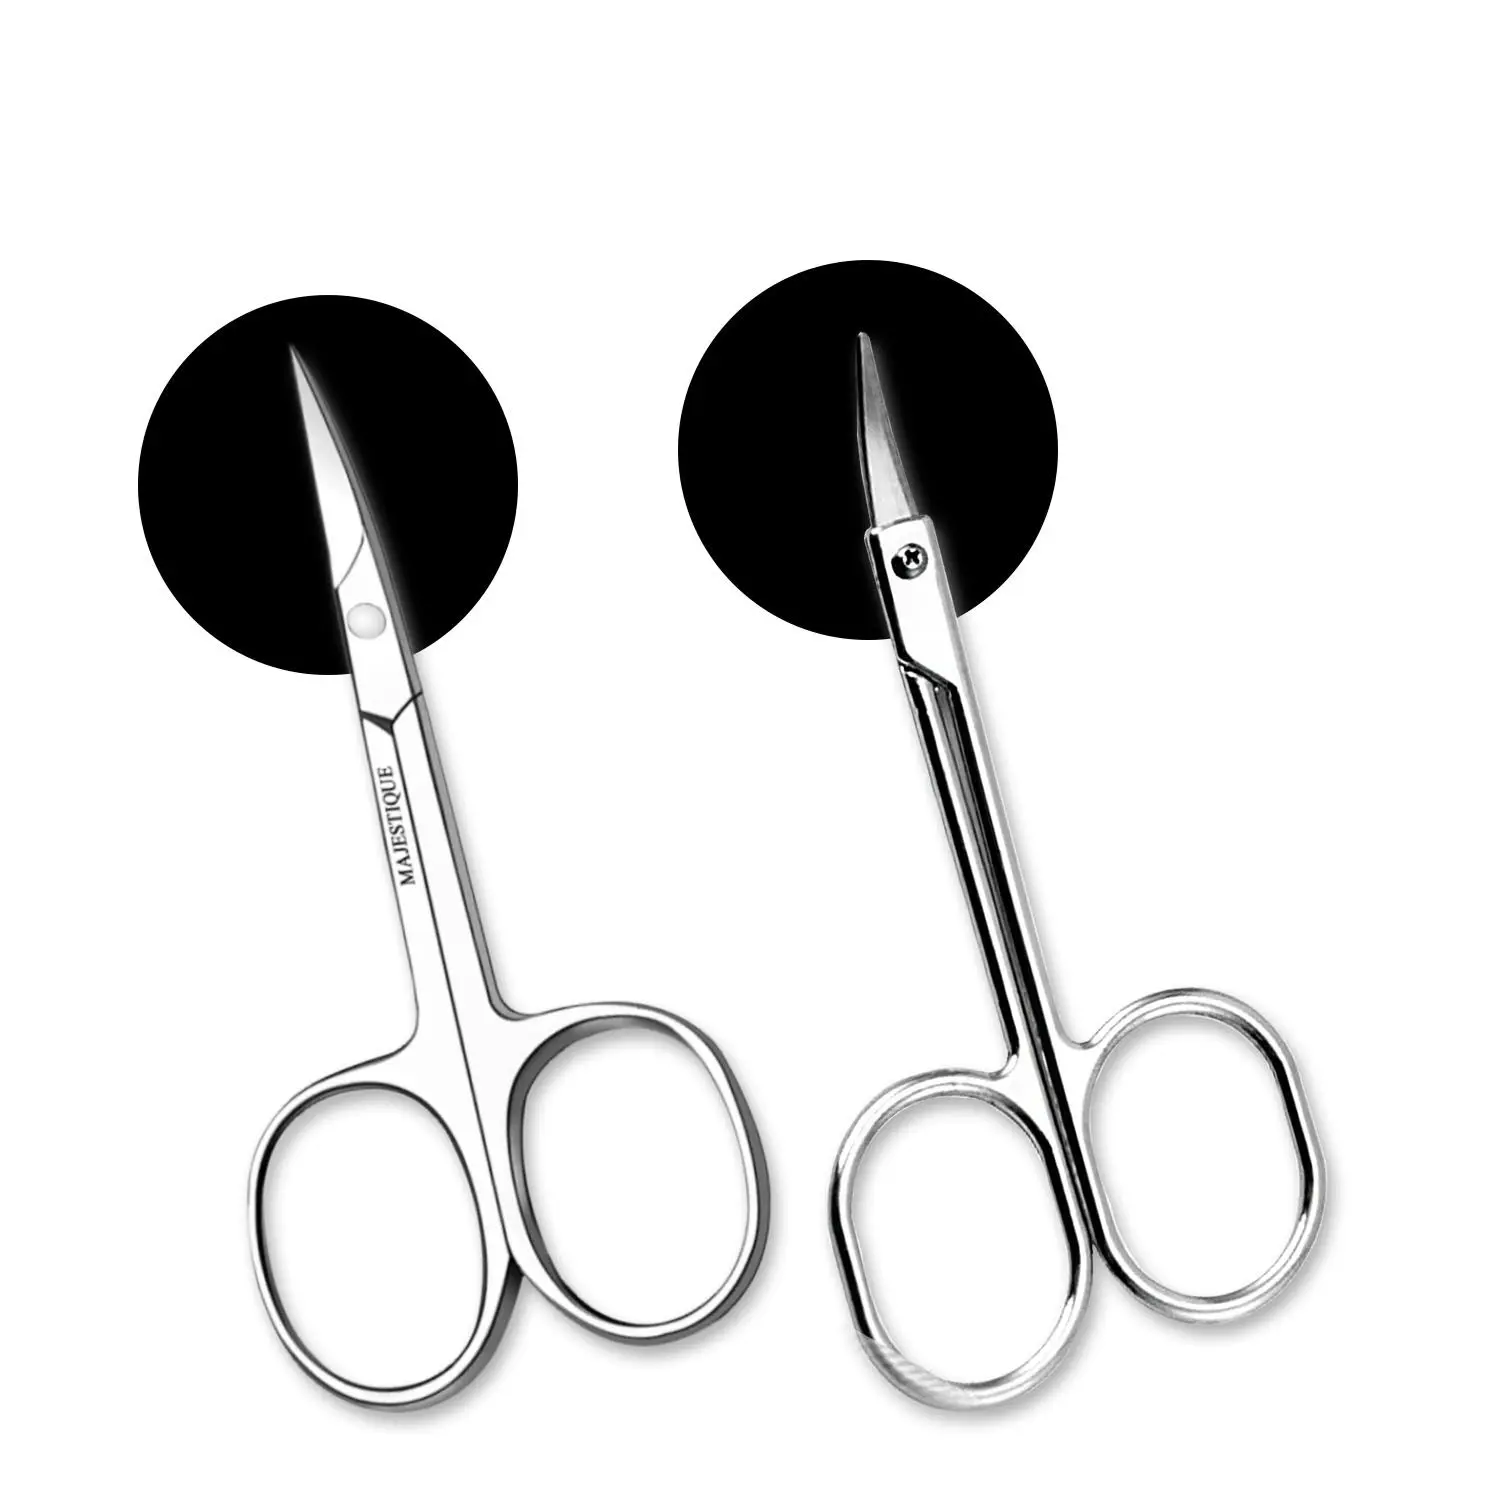 Majestique 2Pcs Professional Cuticle Scissors - Use as Fingernails, Eyebrow Scissors Toenails